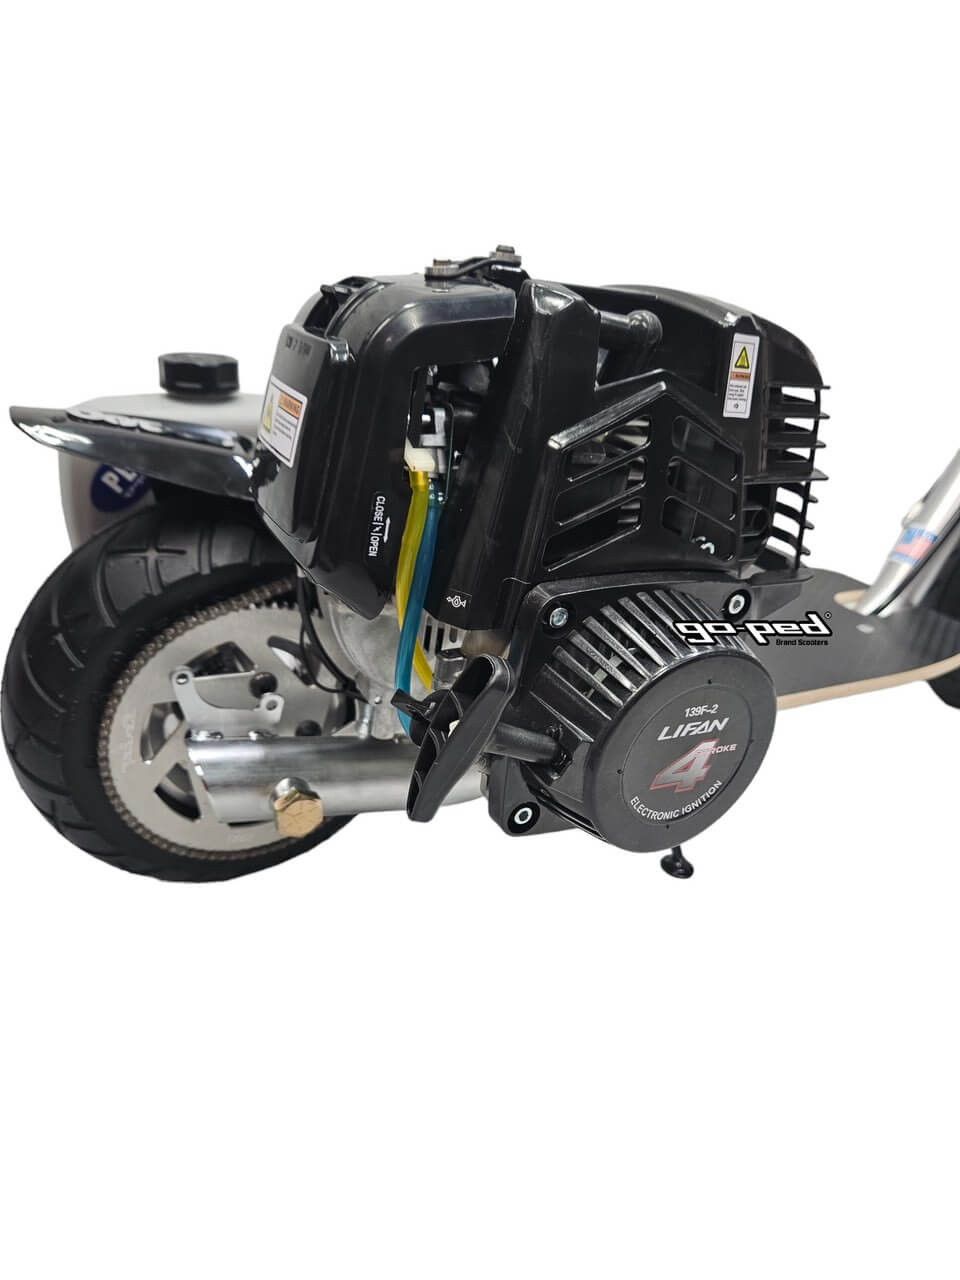 Go-Ped GSR CRUISER 4-STROKE Folding Gas-Powered Scooter